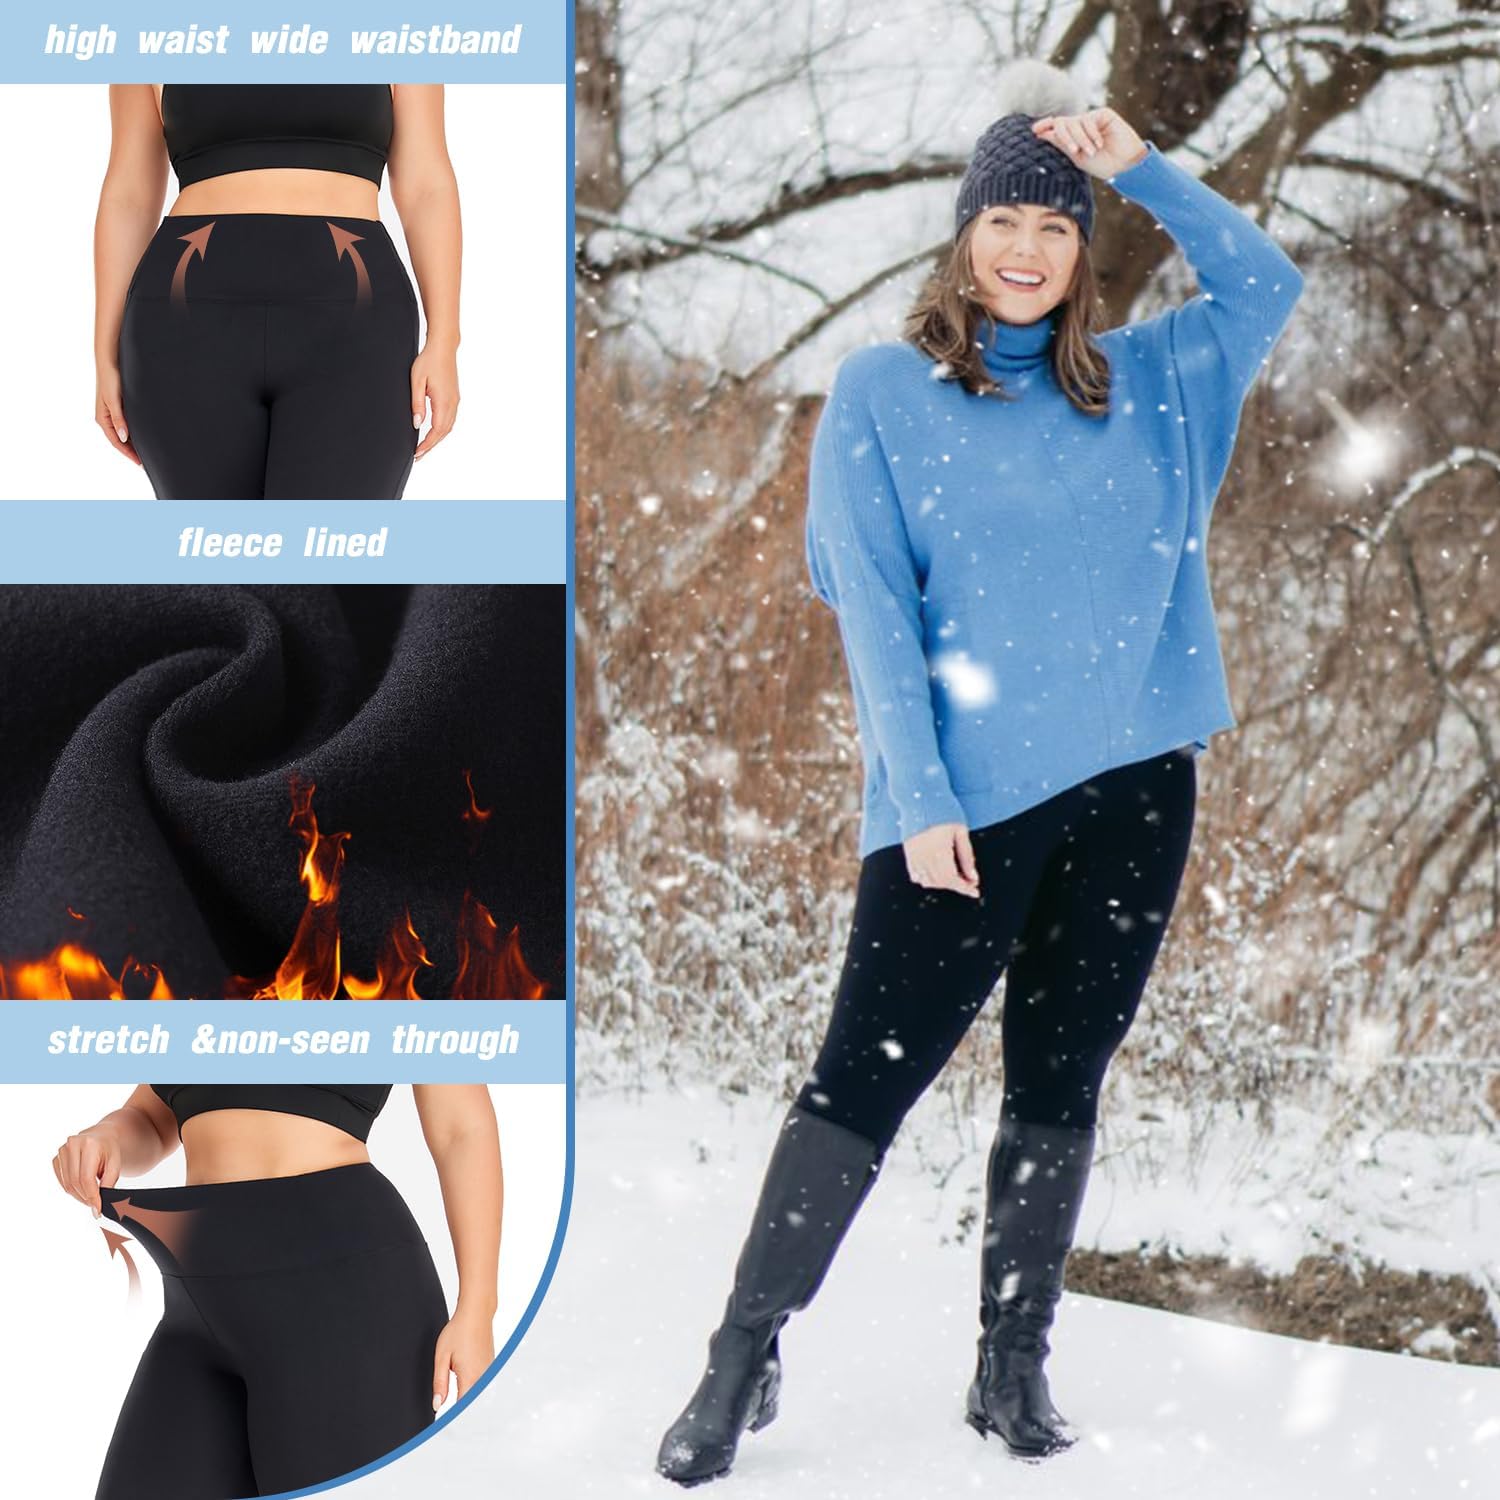 we fleece 3 Pack Plus Size Fleece Lined Leggings Women -Stretchy X-Large-4X Warm Winter Yoga Pants Thermal Leggings